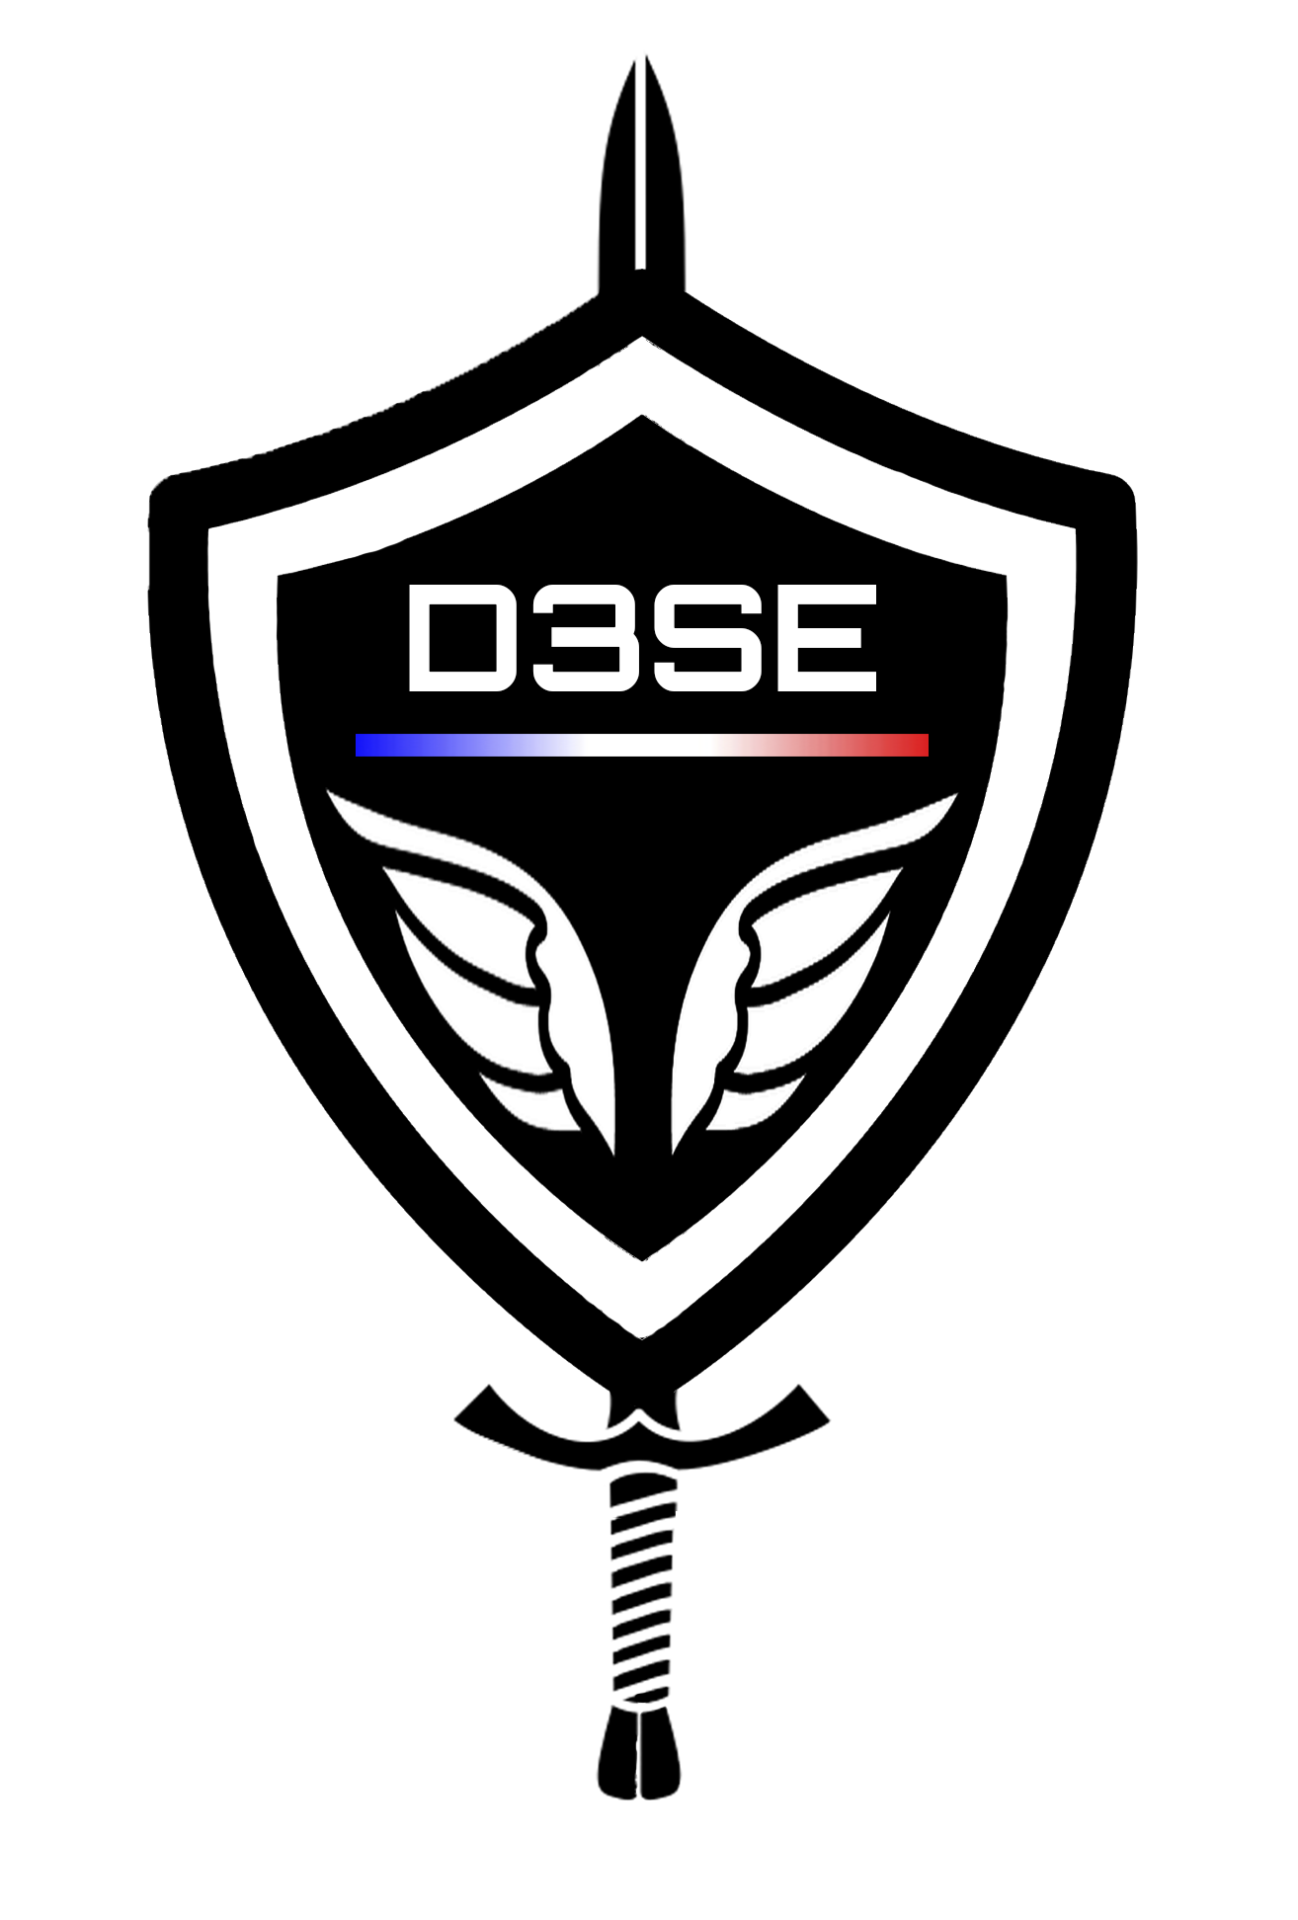 D3SE